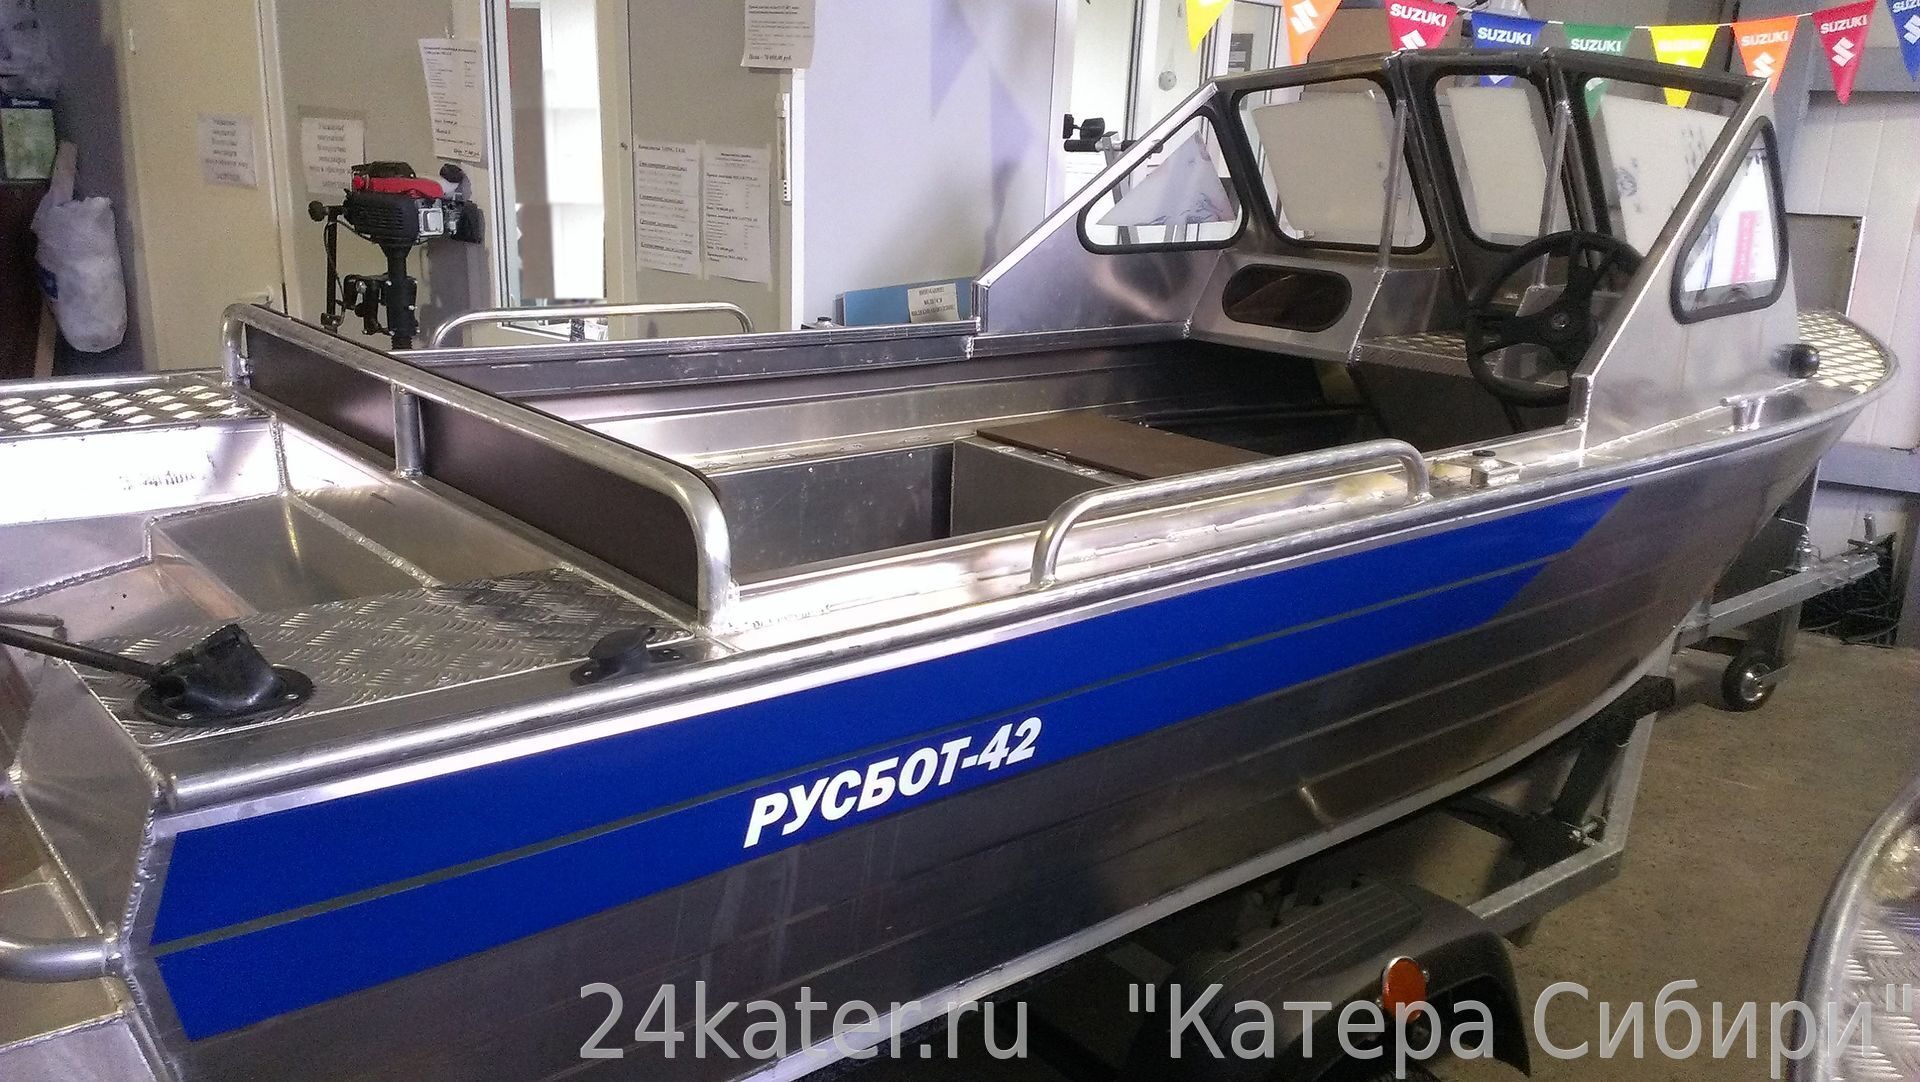 Лодки русбот: производитель, модели и характеристики_ | poseidonboat.ru